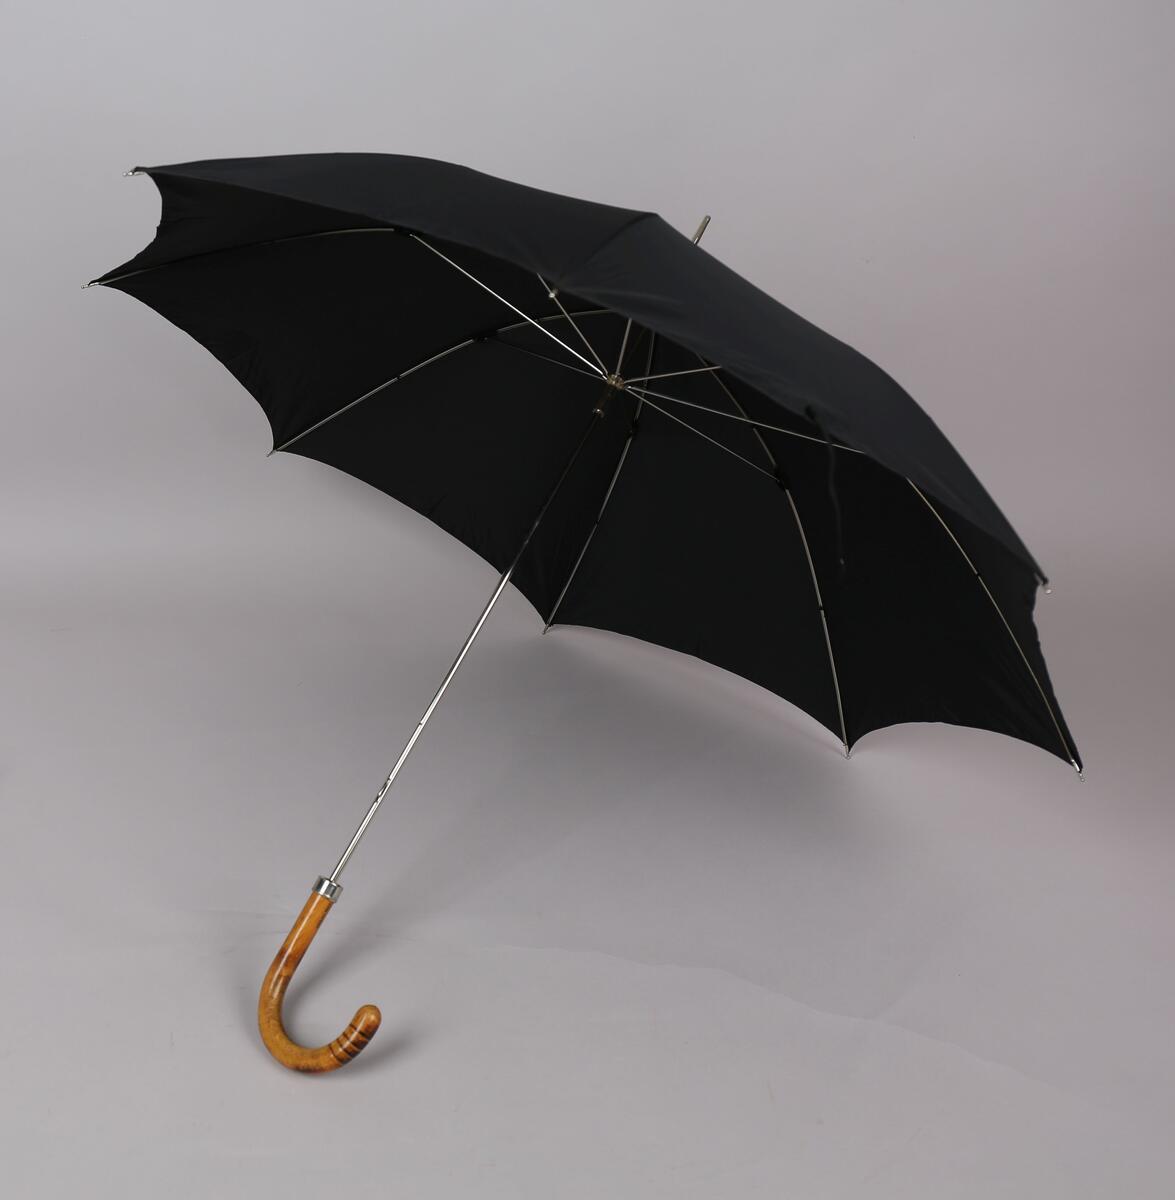 Paraply med 8 spilar og stong i metall. Handtak i tre.